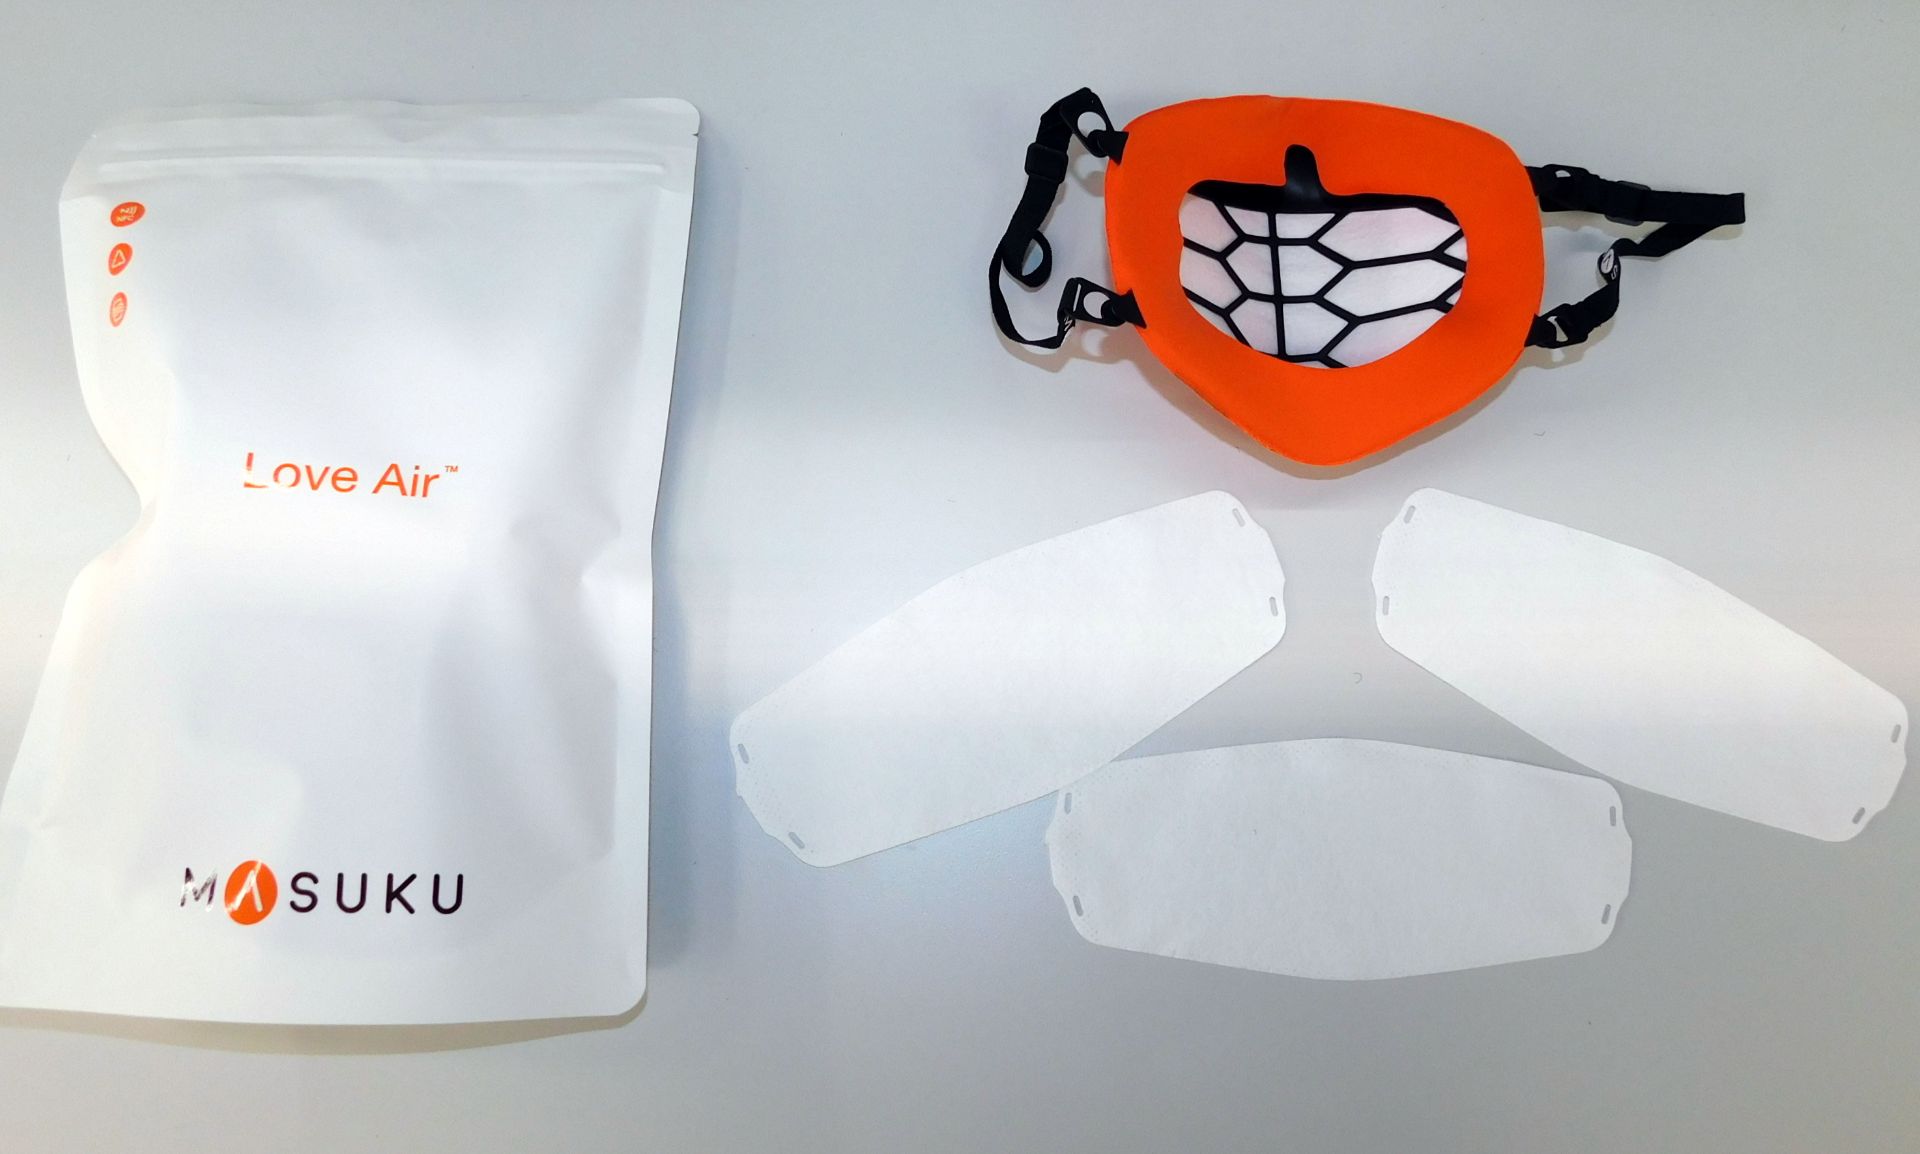 120 Masuku One Reusable Face Masks, Textured Orange, Small (1 Box) - Image 2 of 3